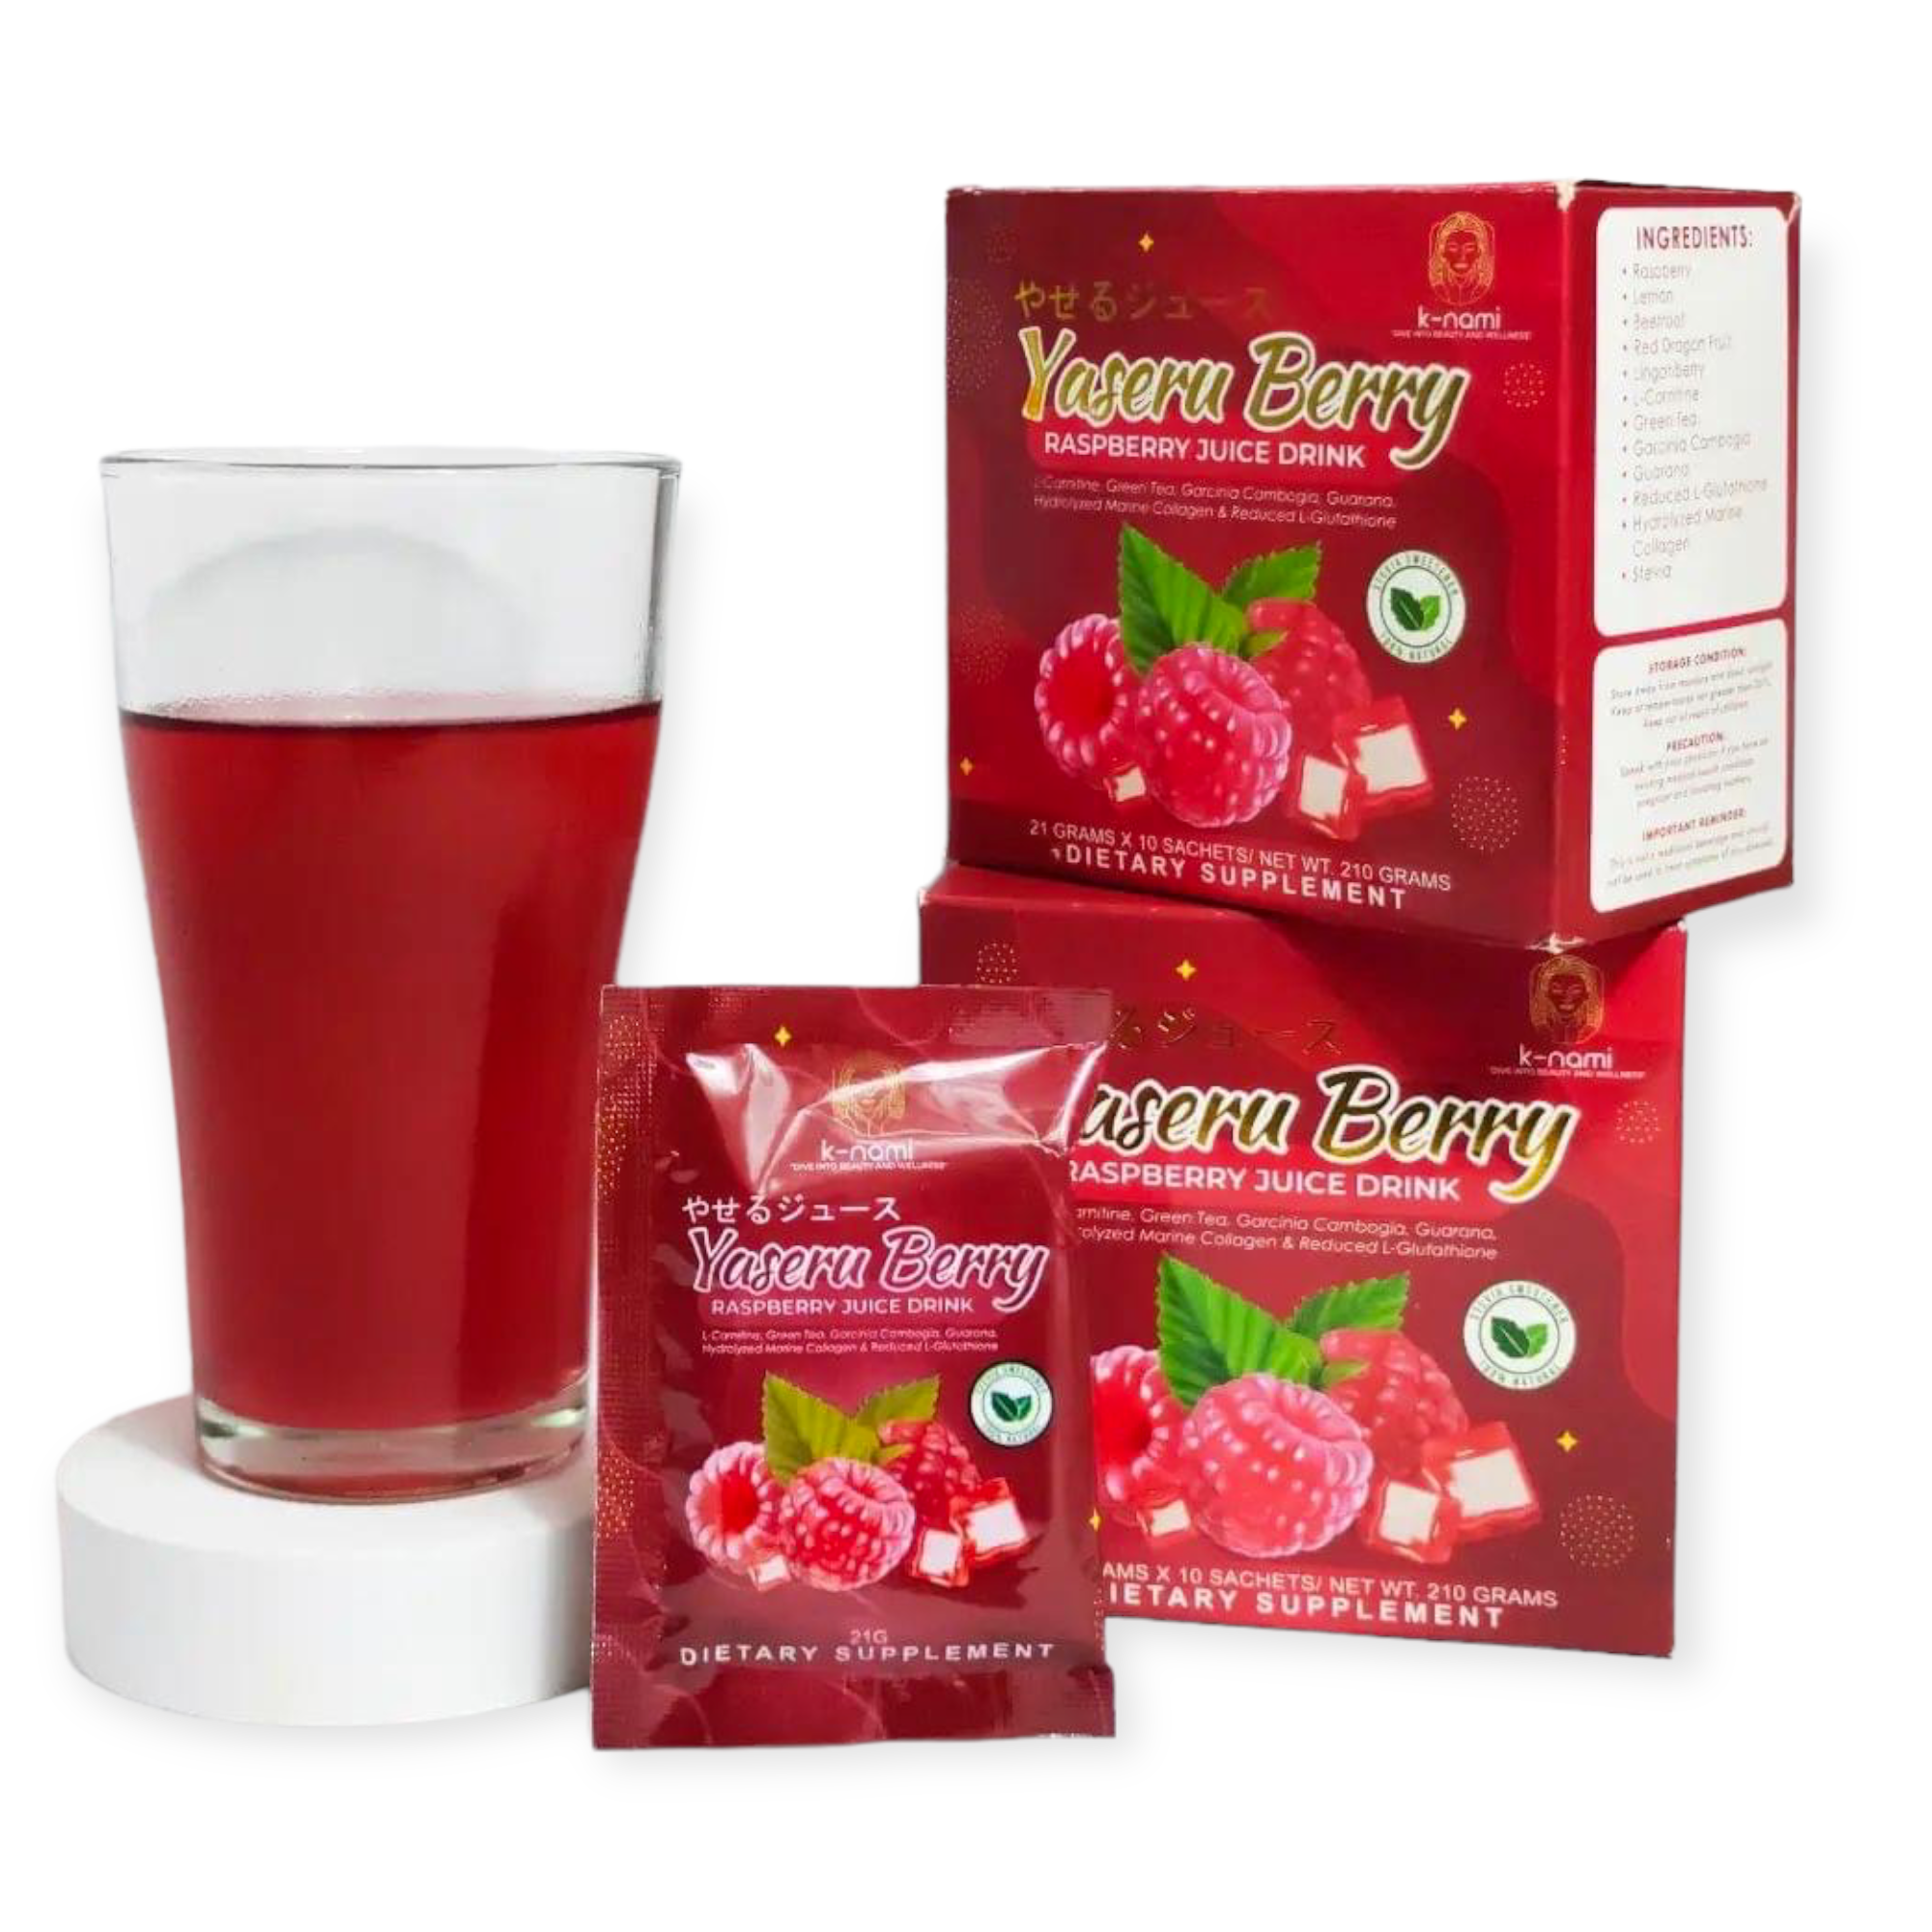 Yaseru Berry - Raspberry Juice Drink - Beauty Juice 21 g x 10